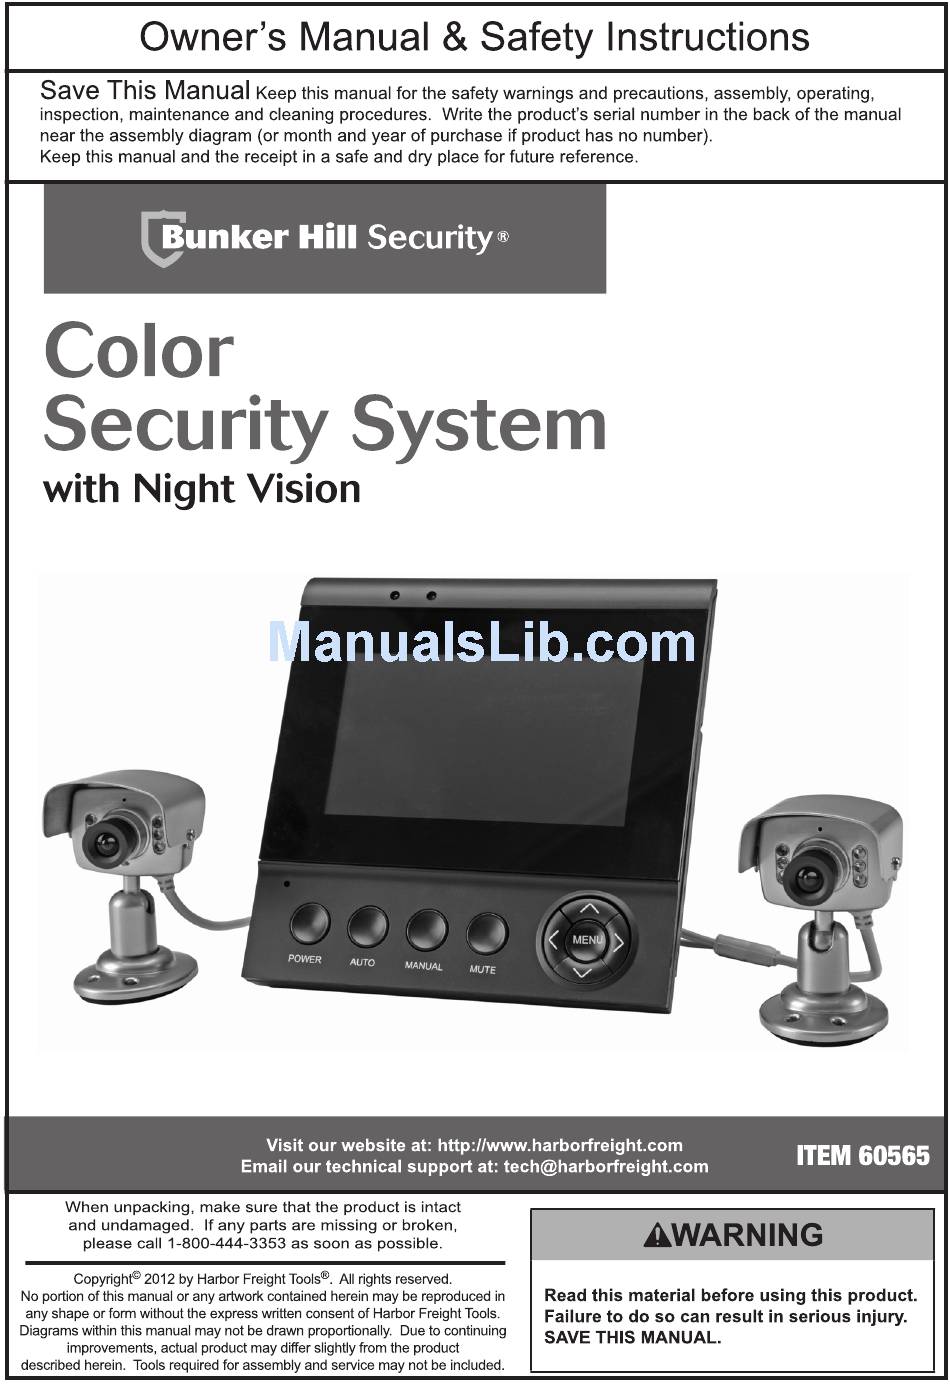 BUNKER HILL SECURITY 60565 OWNER'S MANUAL Pdf Download | ManualsLib